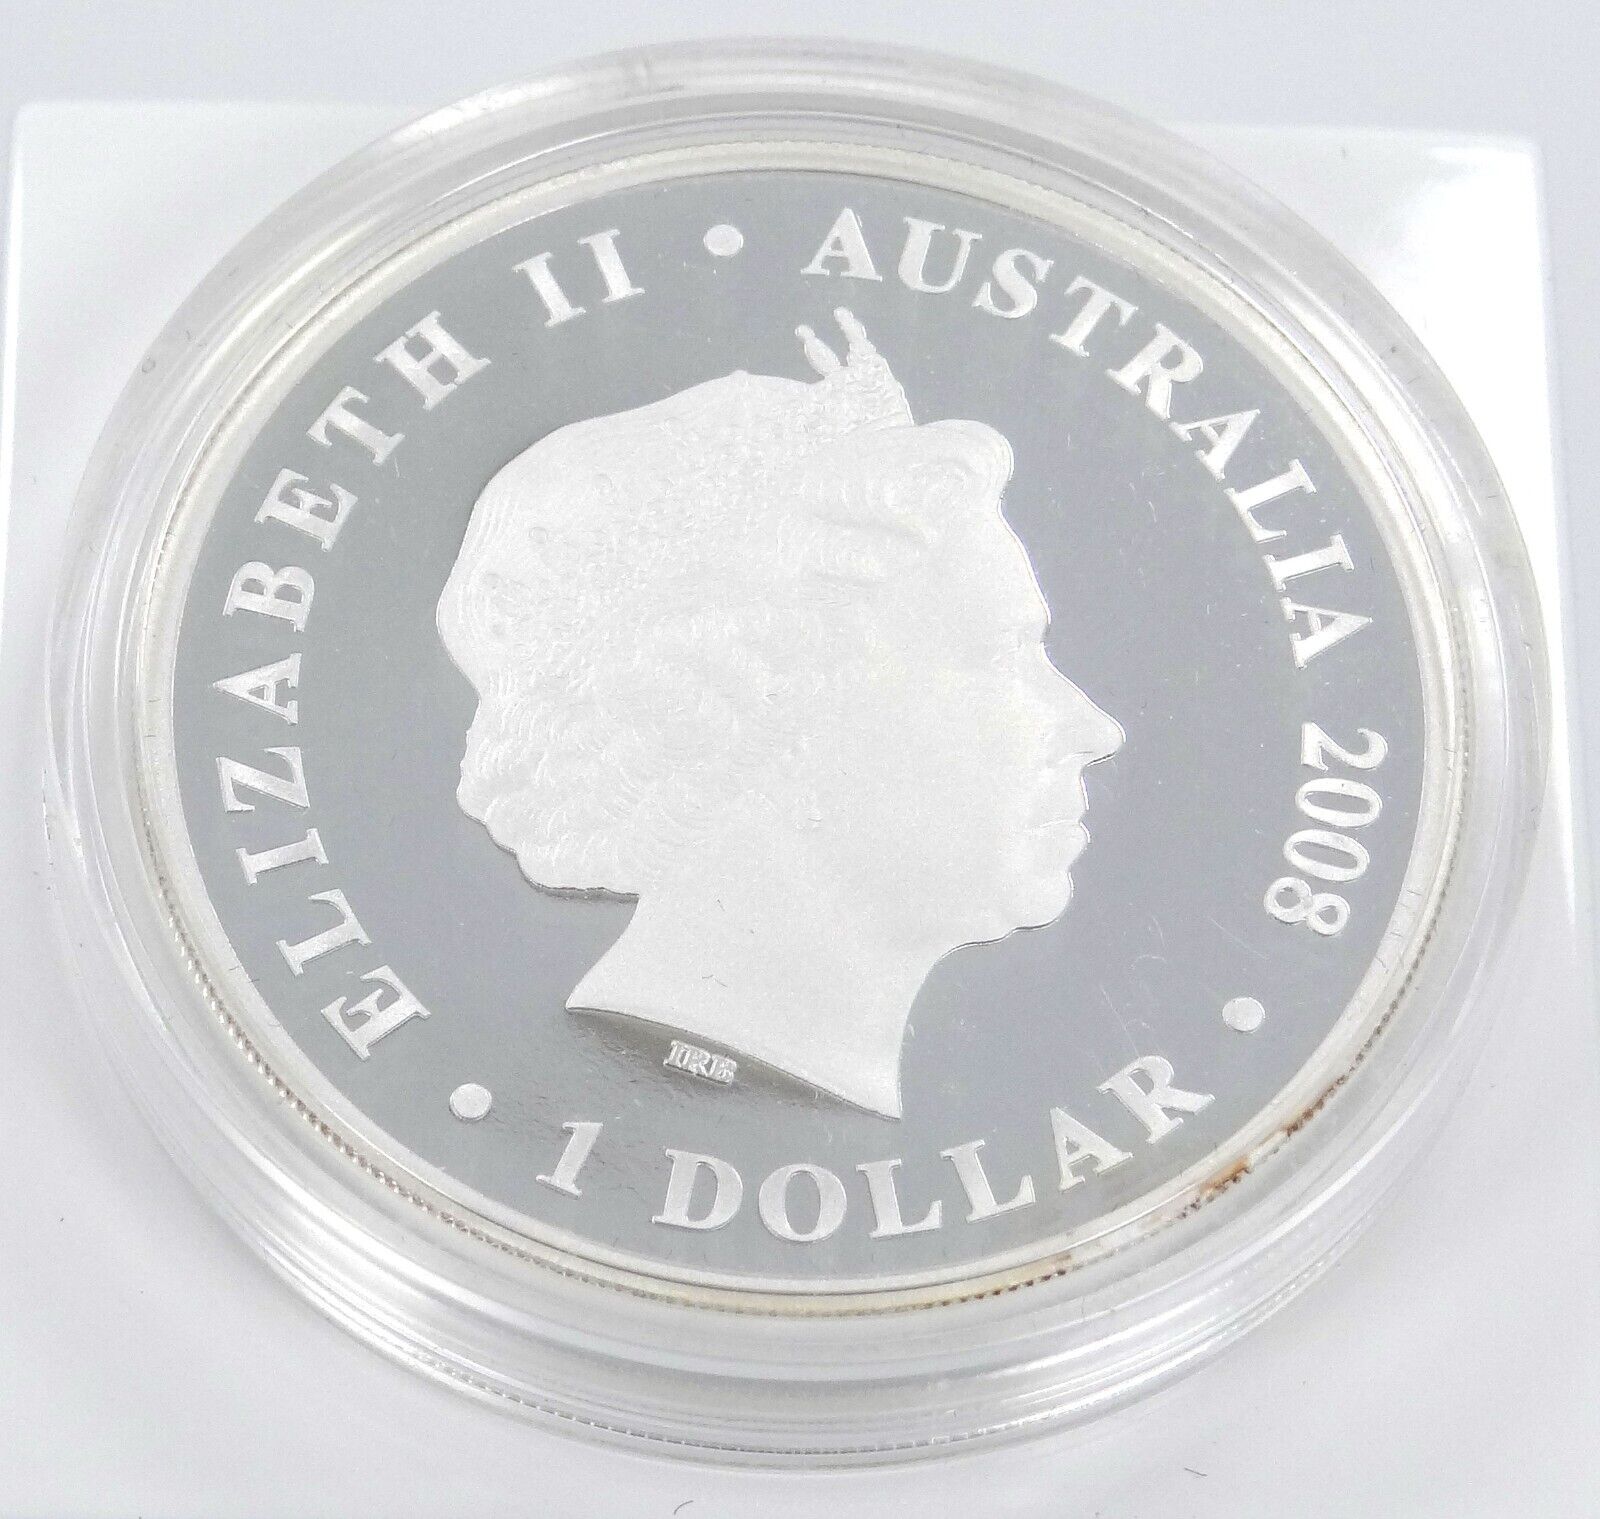 1 Oz Silver Coin 2008 $1 Australia The First Fleets 1788 Captain Arthur Phillip-classypw.com-1